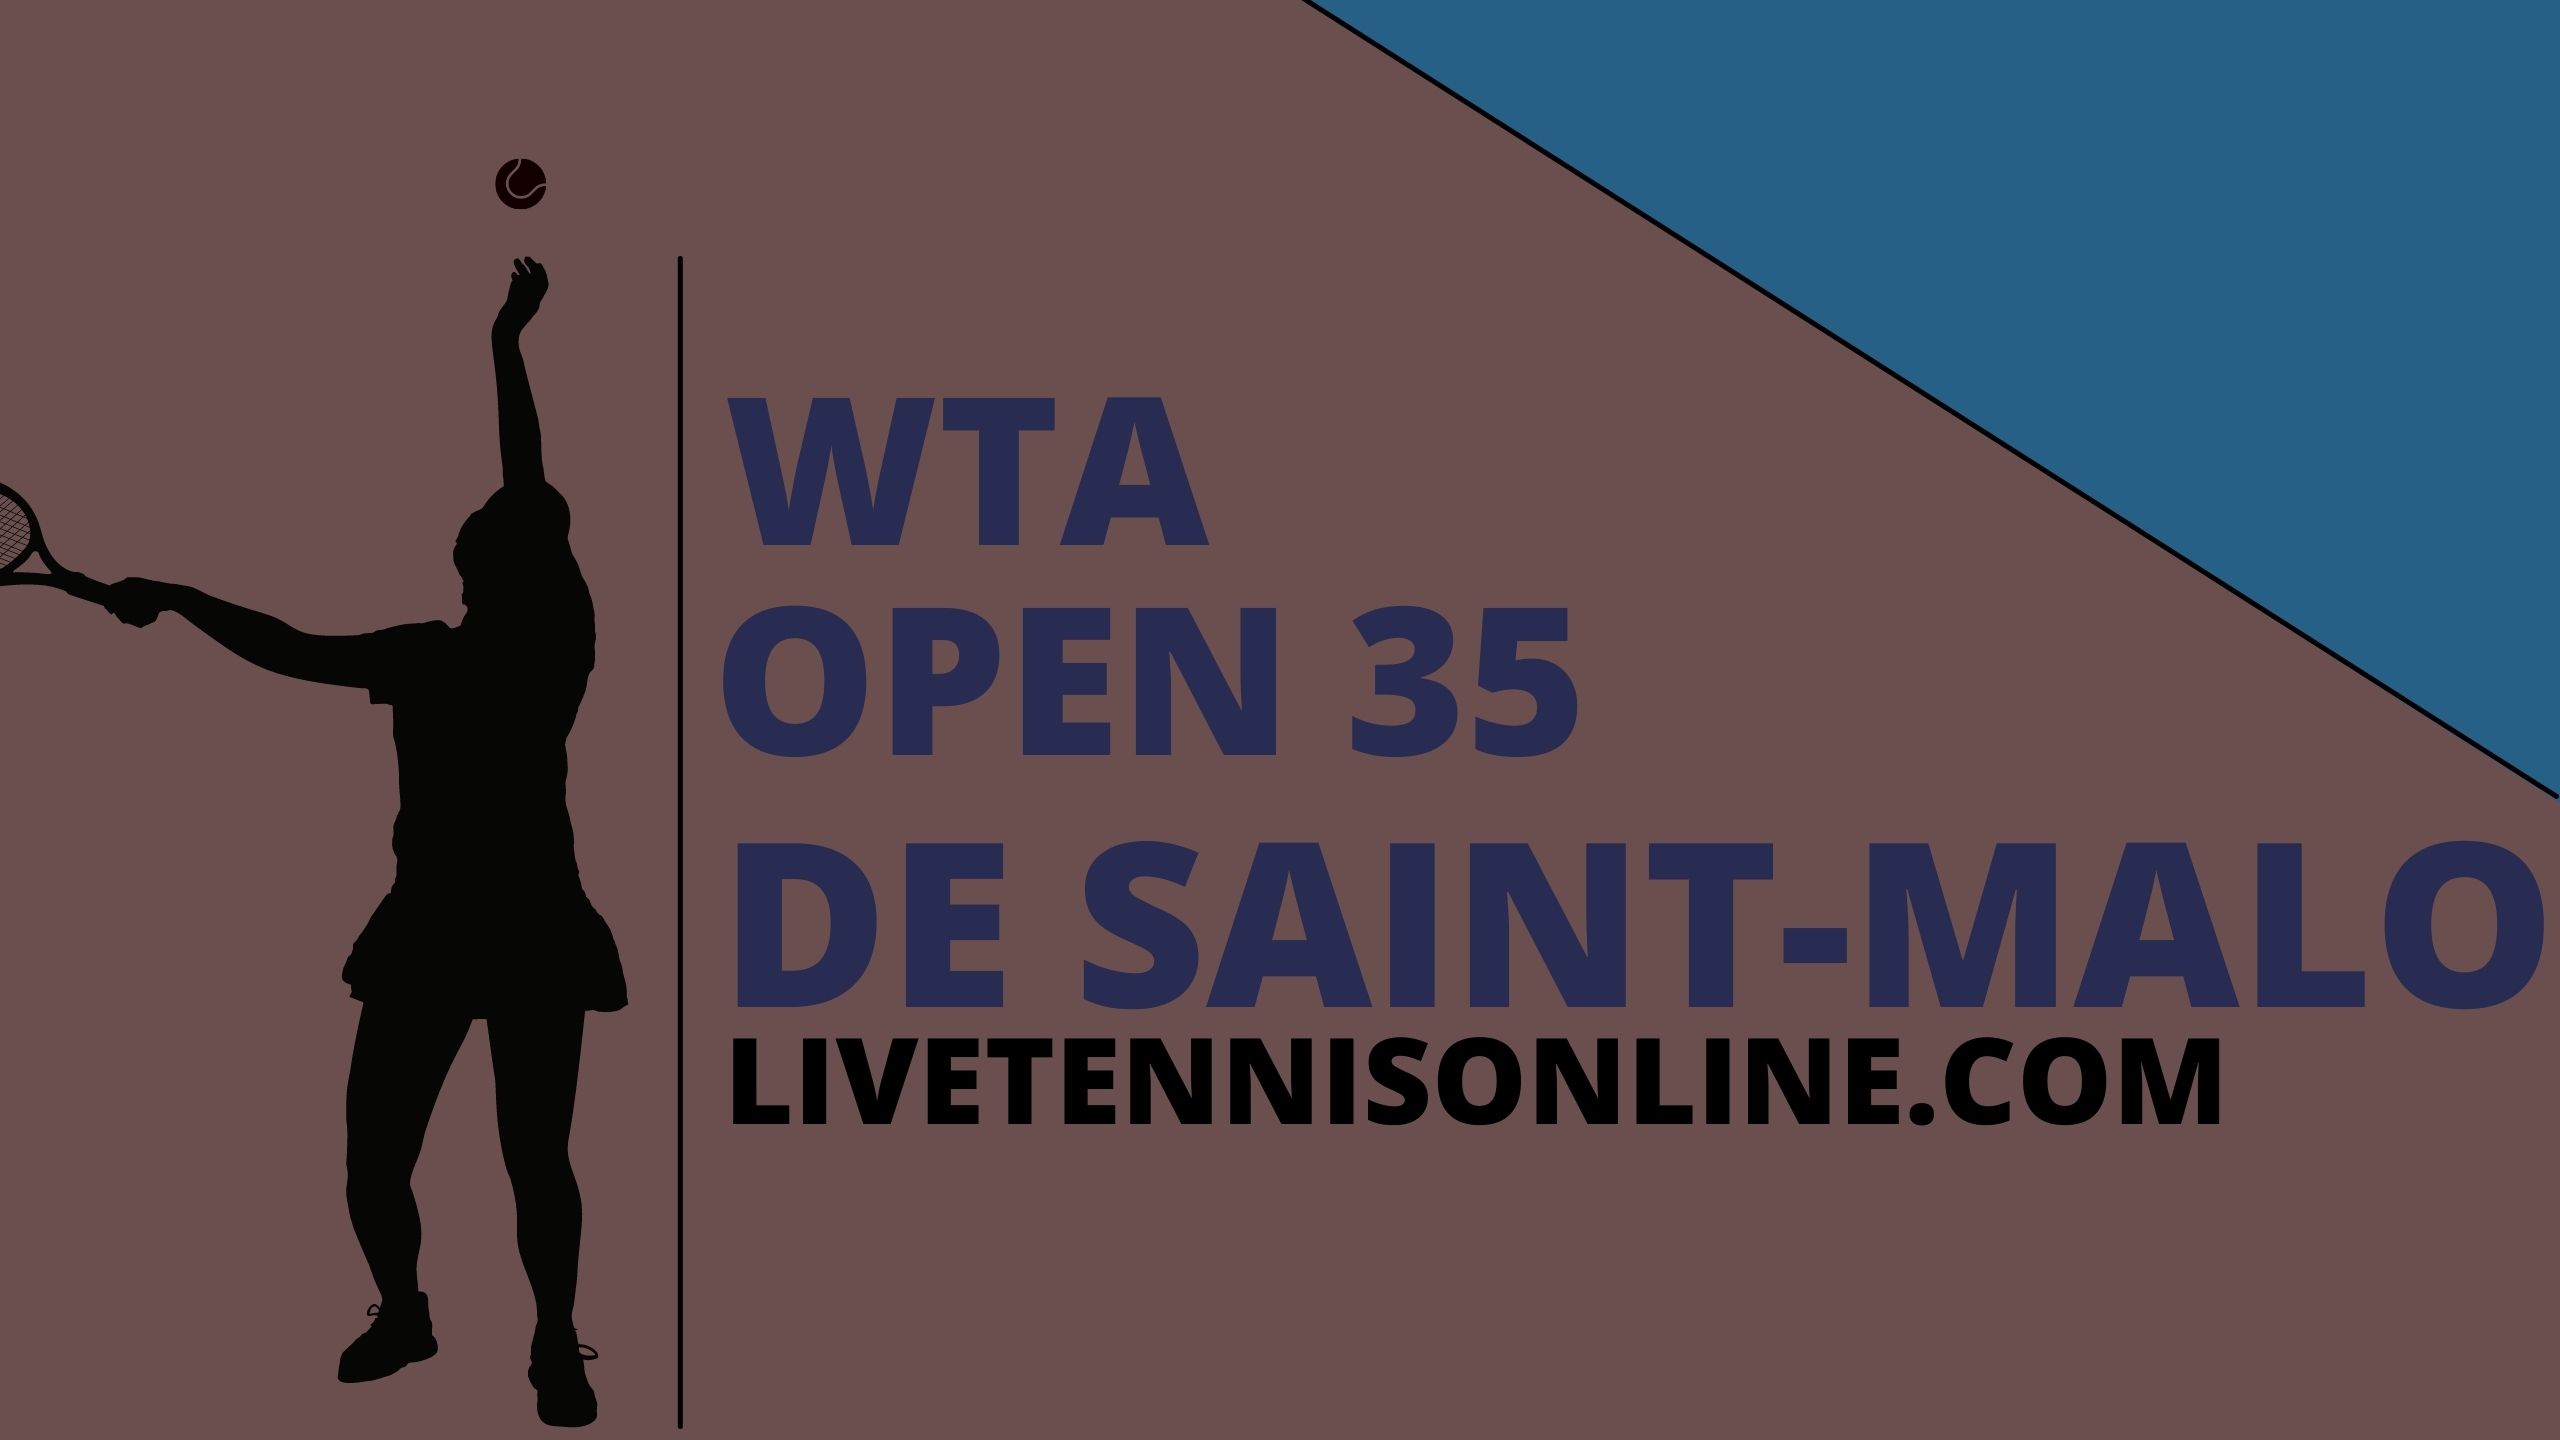 WTA LOpen 35 De Saint Malo Tennis Live Stream